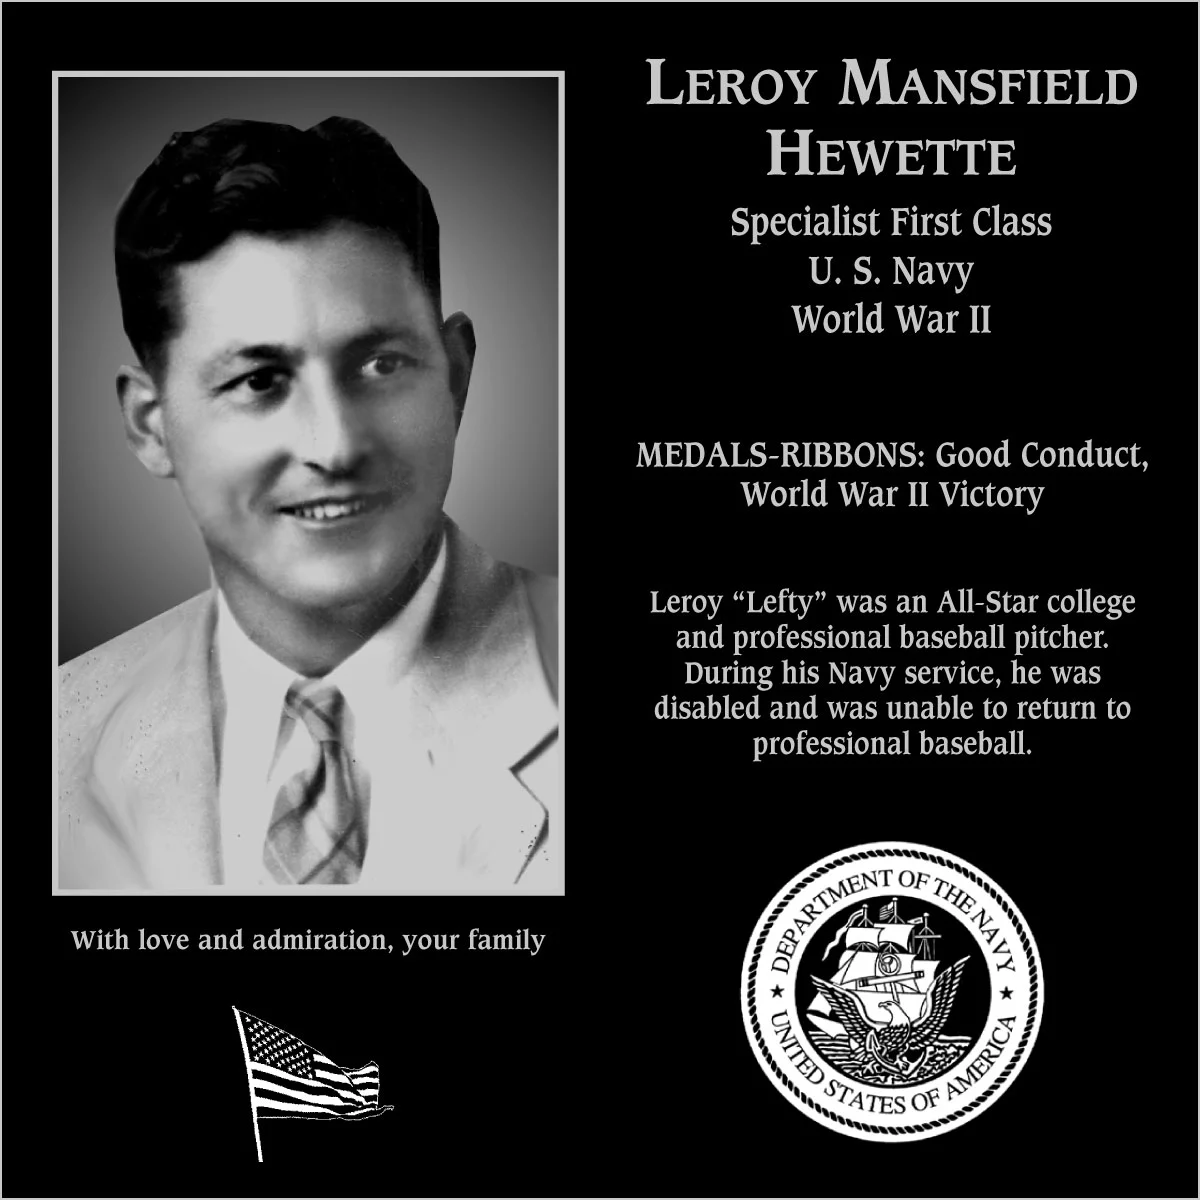 Leroy Mansfield “Lefty” Hewette